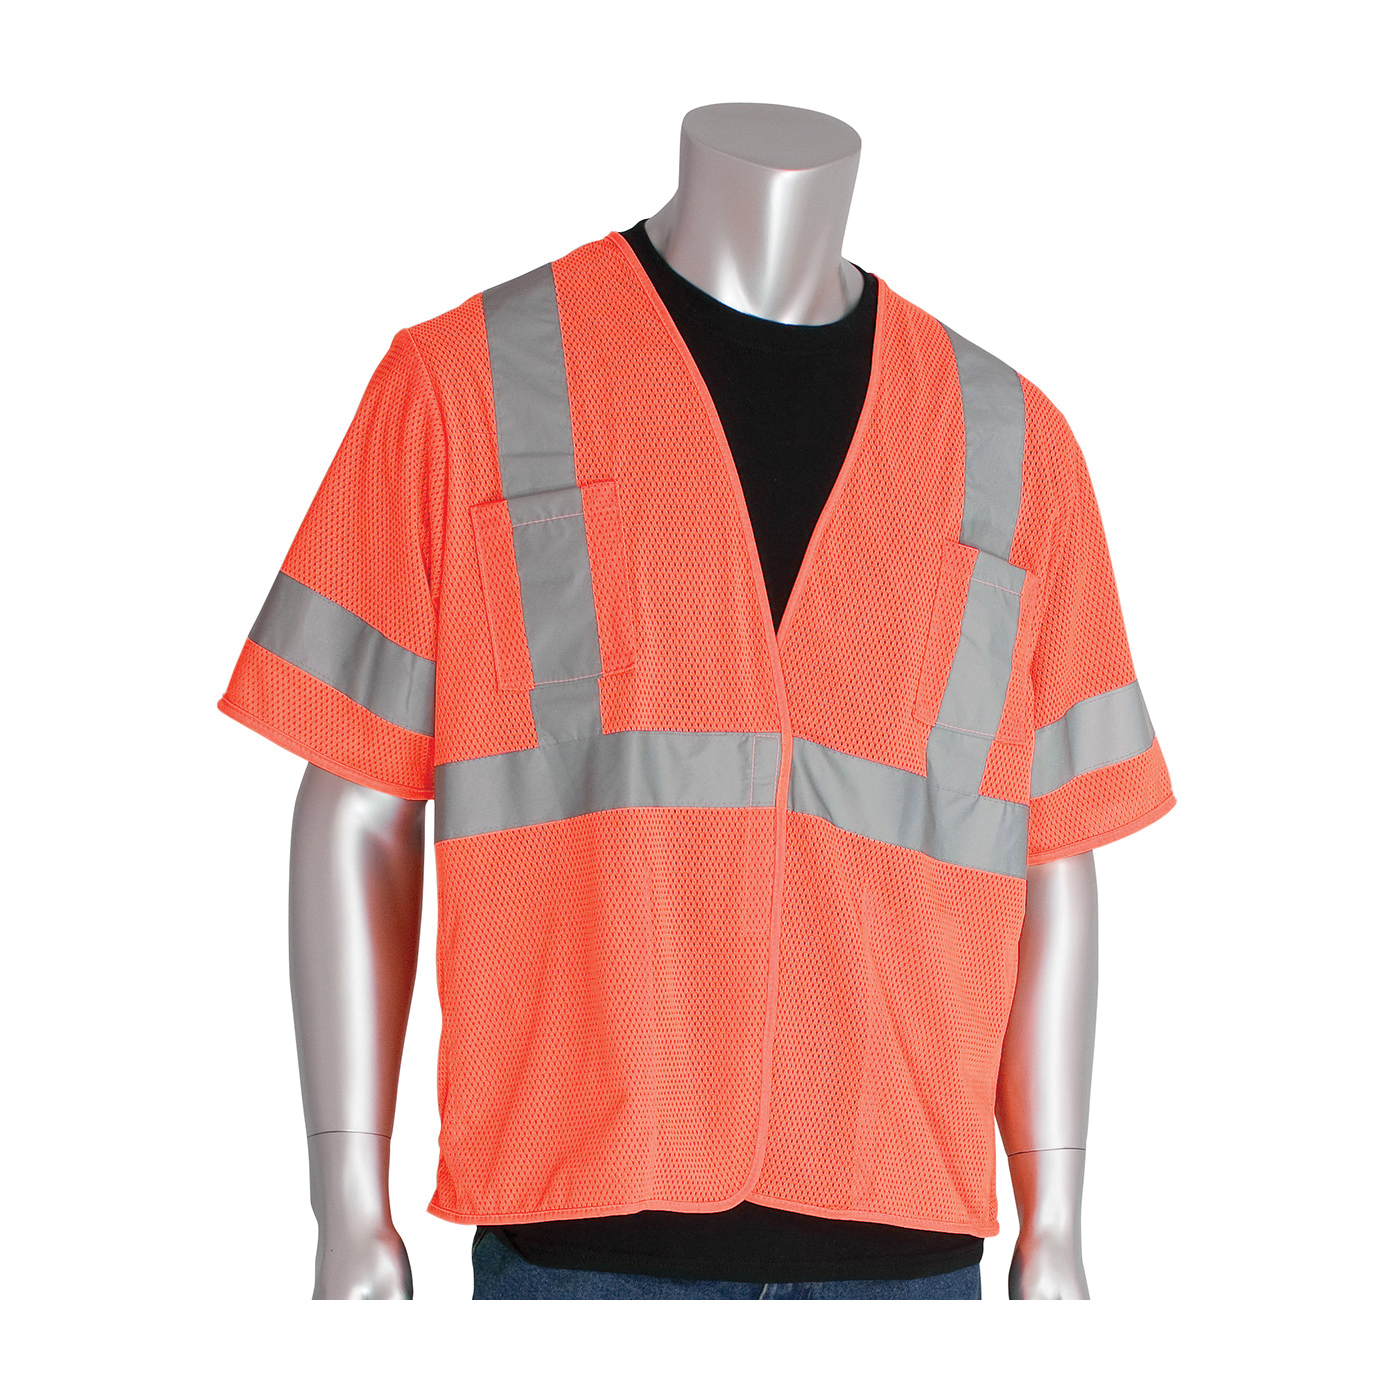 PIP® 303-HSVEOR-2X Safety Vest, 2XL, Hi-Viz Orange, Polyester Mesh, Hook and Loop Closure, 4 Pockets, ANSI Class: Class 3, ANSI 107 Type R